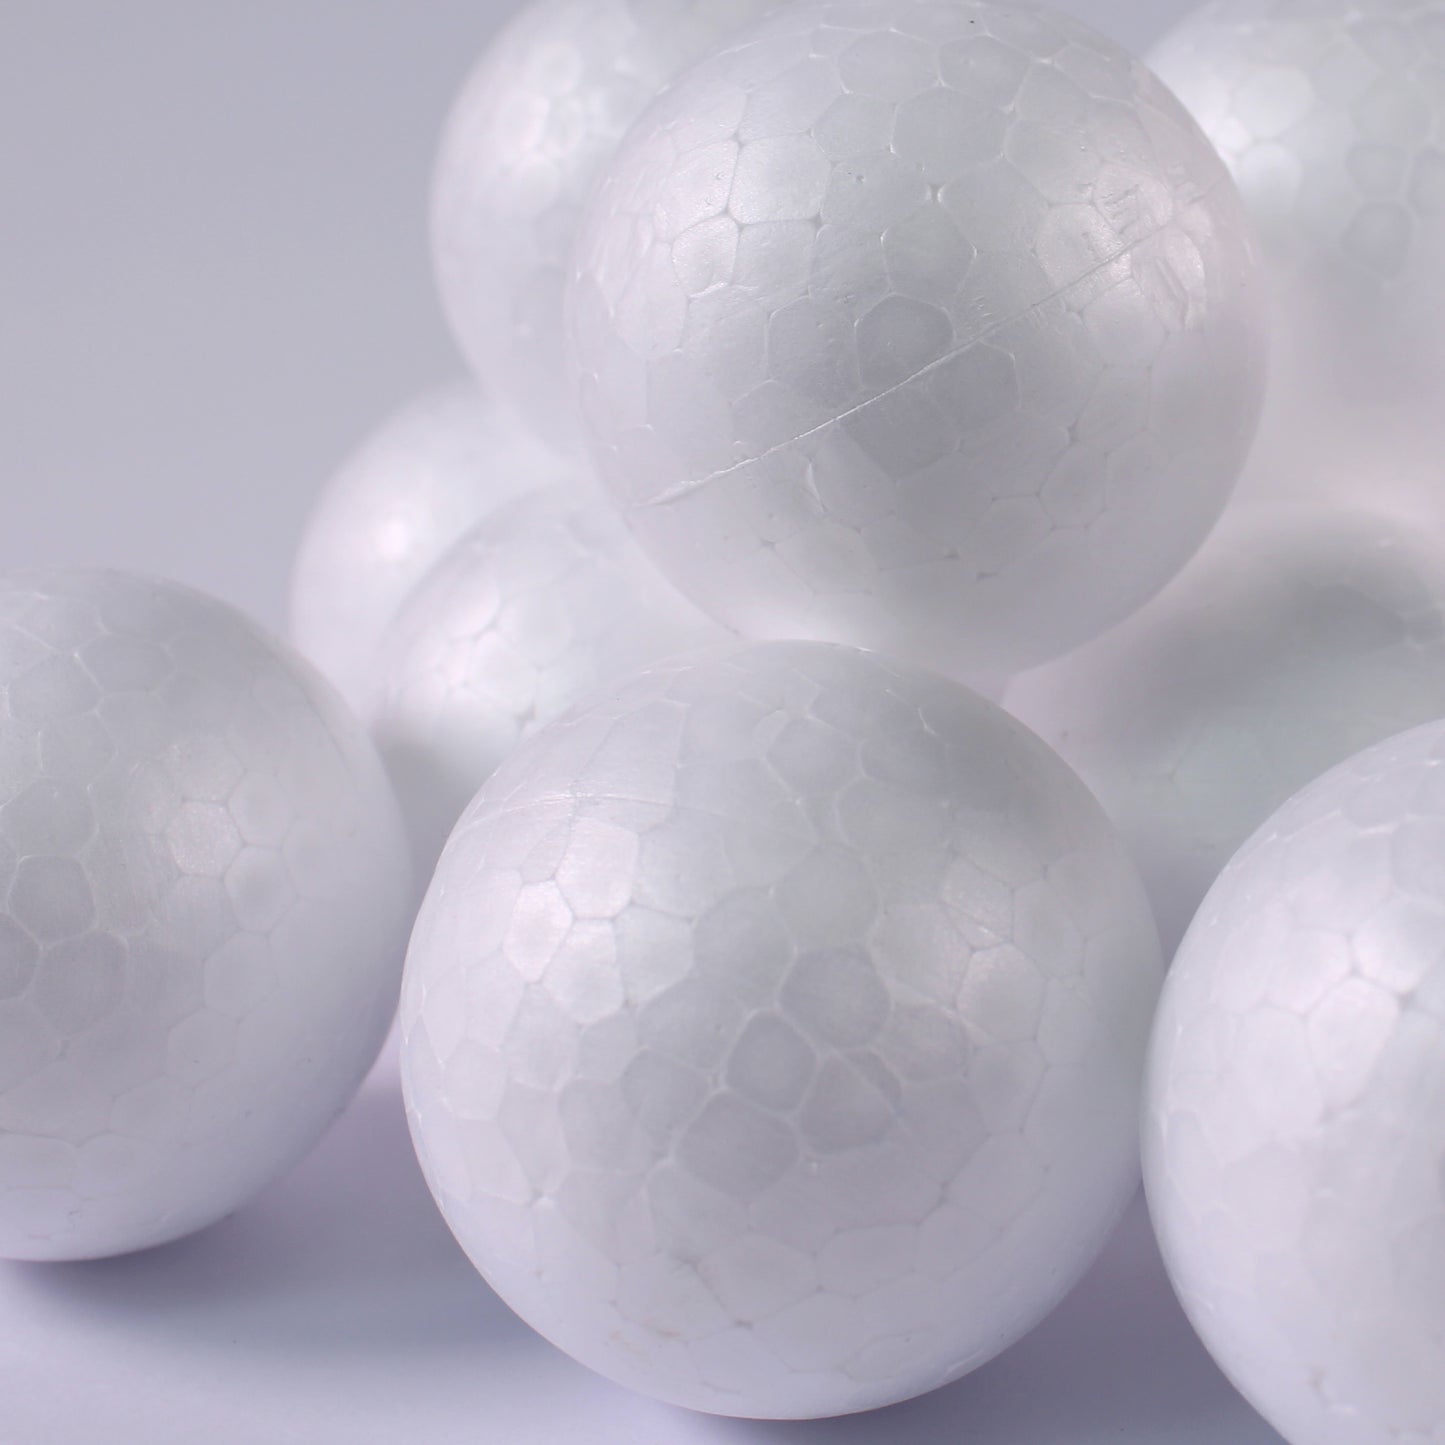 70mm polystyrene balls